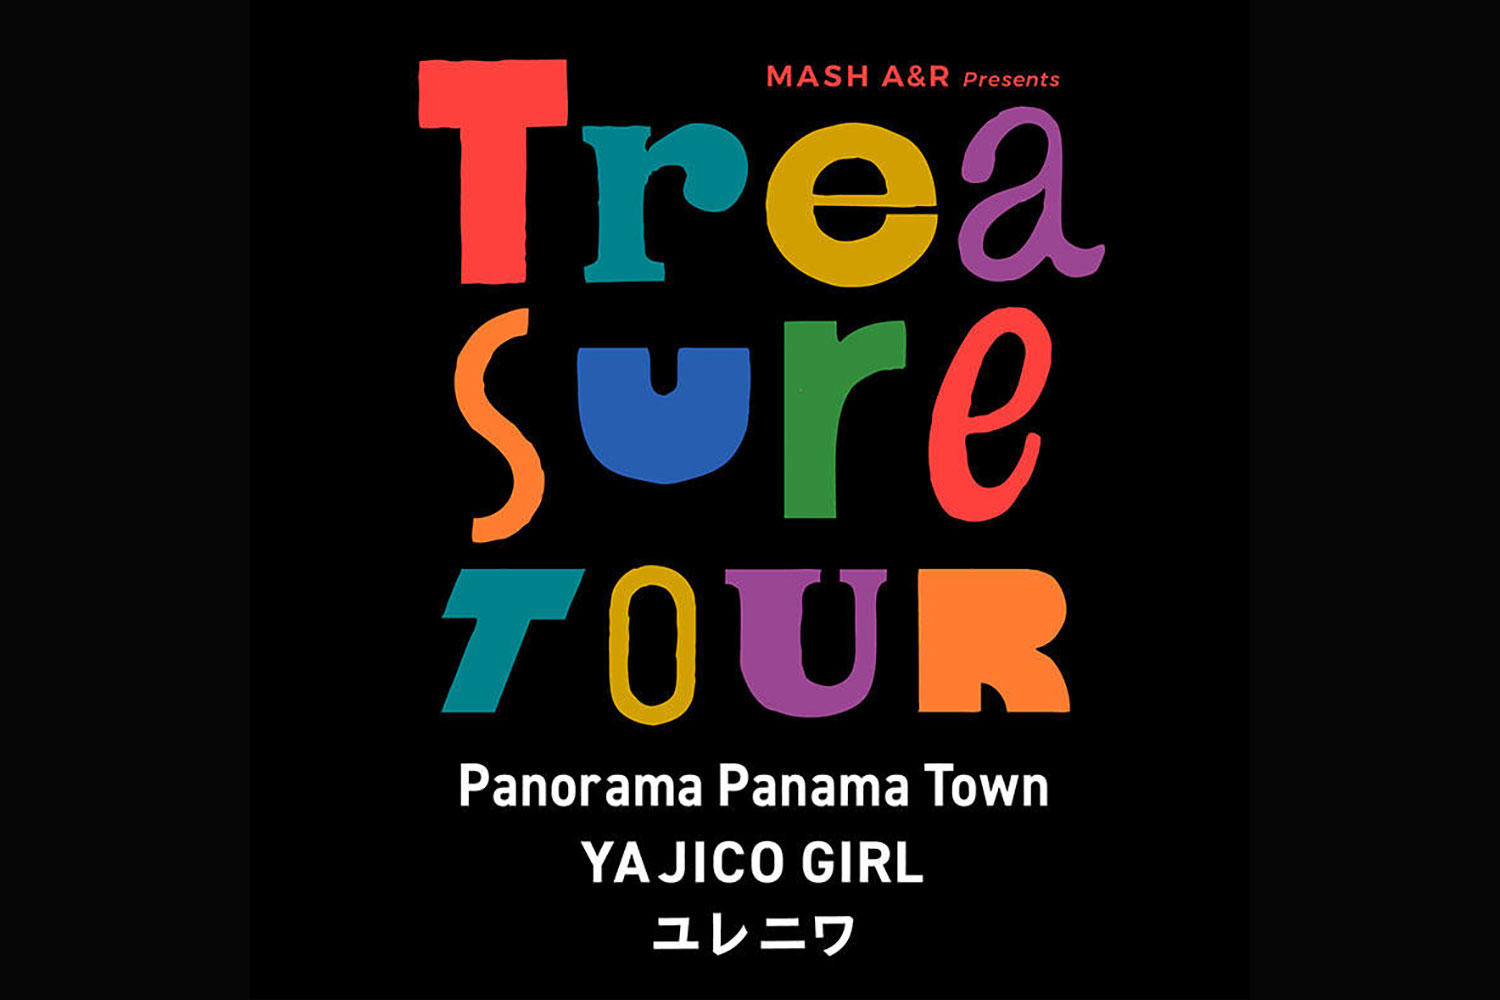 Panorama Panama Town・YAJICO GIRL・ユレニワ出演のMASH A&R主催ツアー、追加出演者にMercy Woodpecker決定！